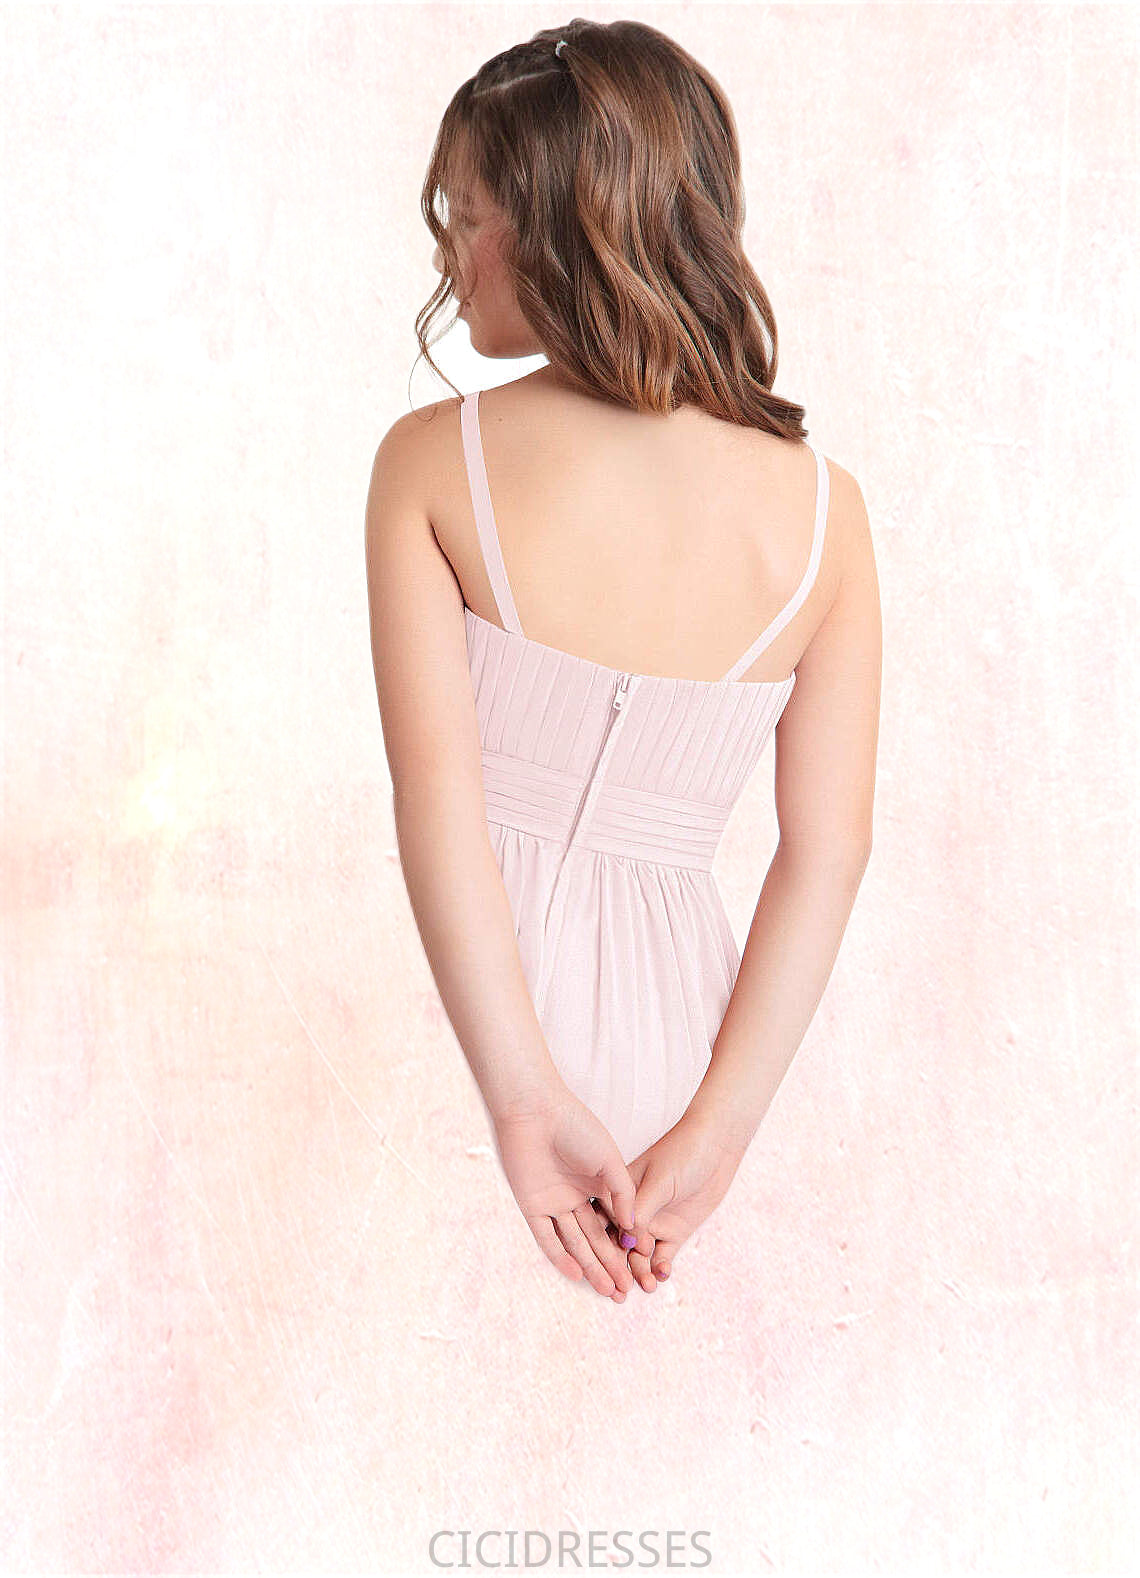 Caitlyn A-Line Floral Chiffon Floor-Length Junior Bridesmaid Dress Blushing Pink CIC8P0022851